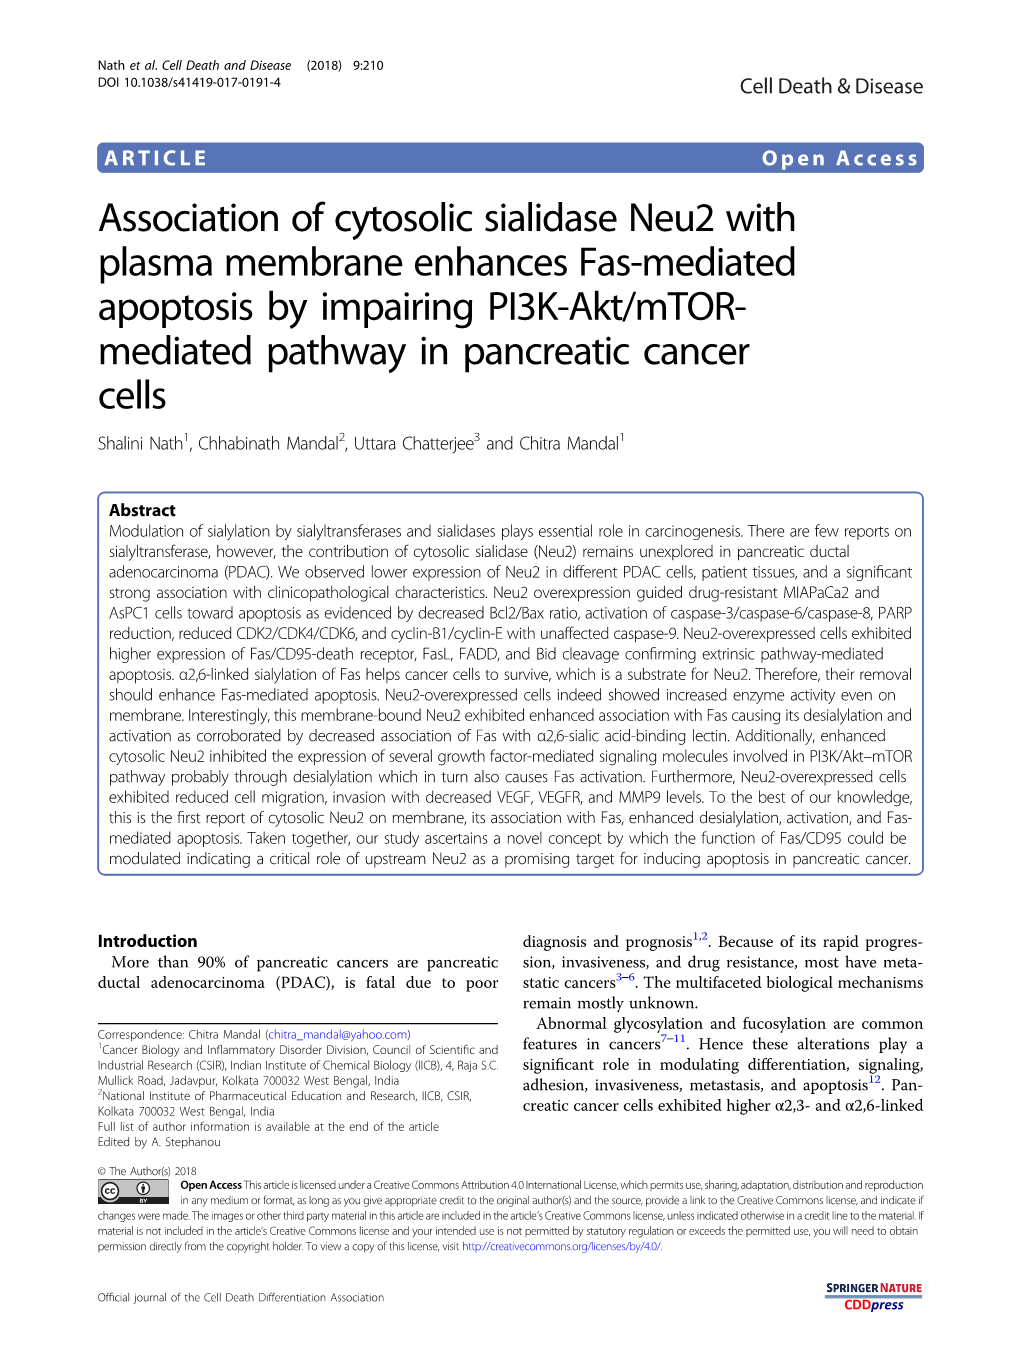 Association of Cytosolic Sialidase Neu2 with Plasma Membrane